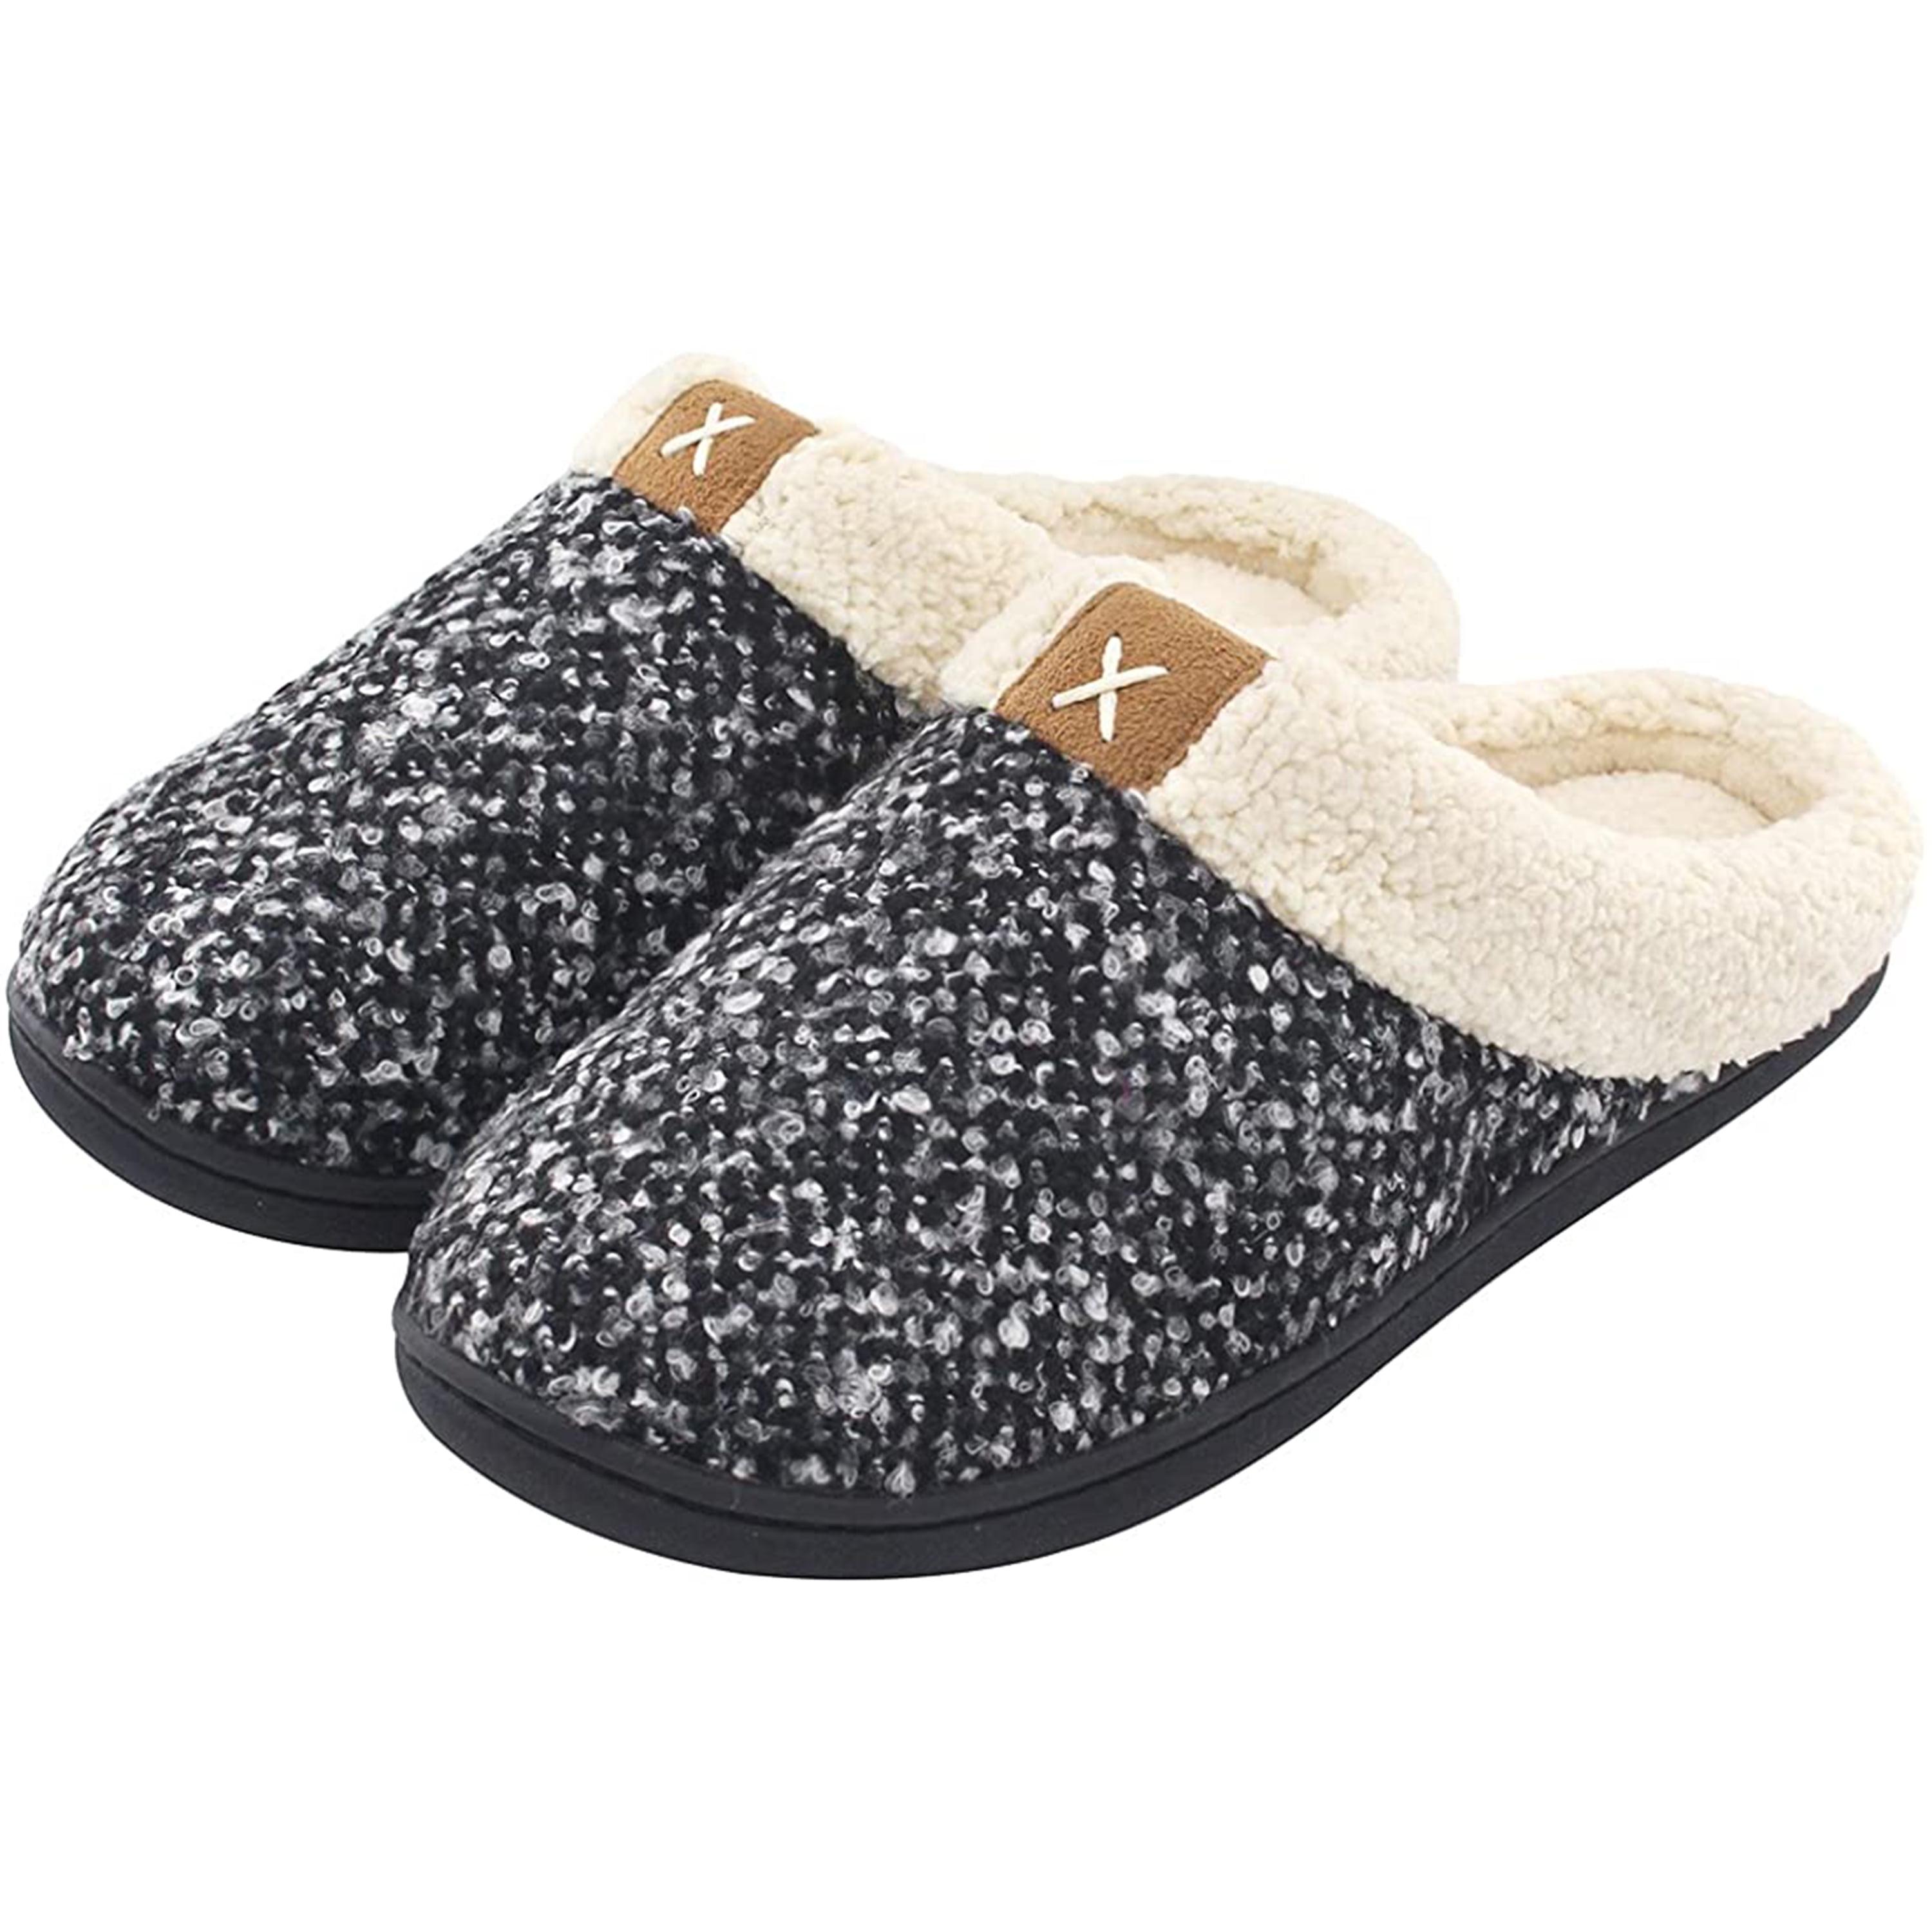 Men's Comfort Memory Foam Slippers Wool-Like Plush House Shoes  Anti-Skid Rubbe 